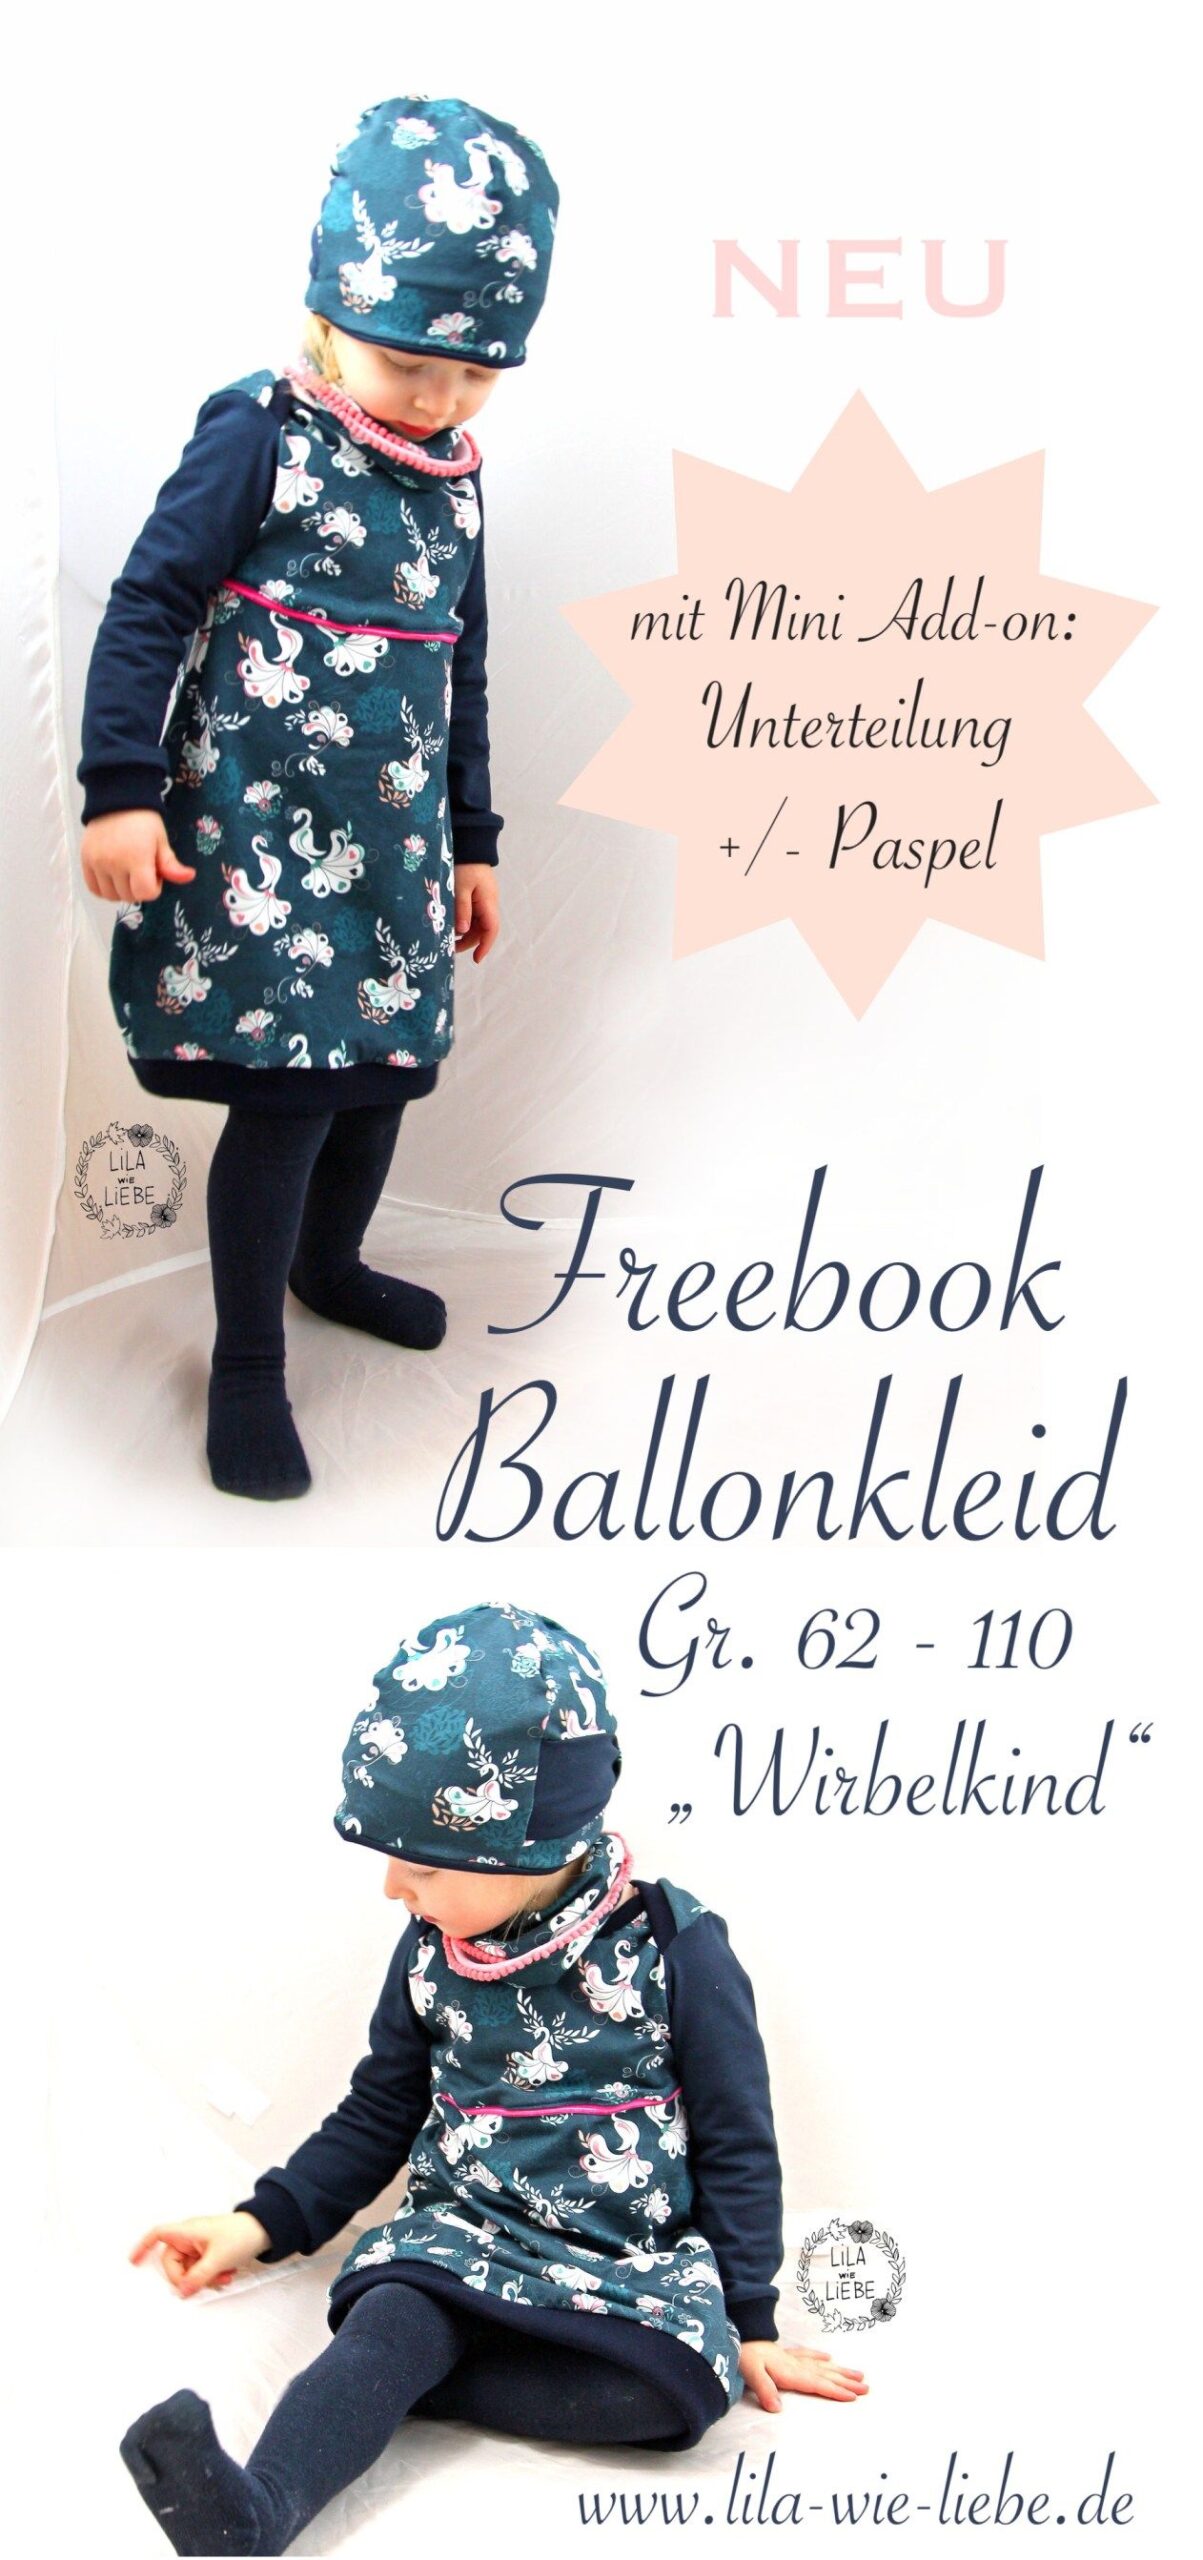 Ballonkleid "Wirbelkind" - Mini Add-On zum Freebook